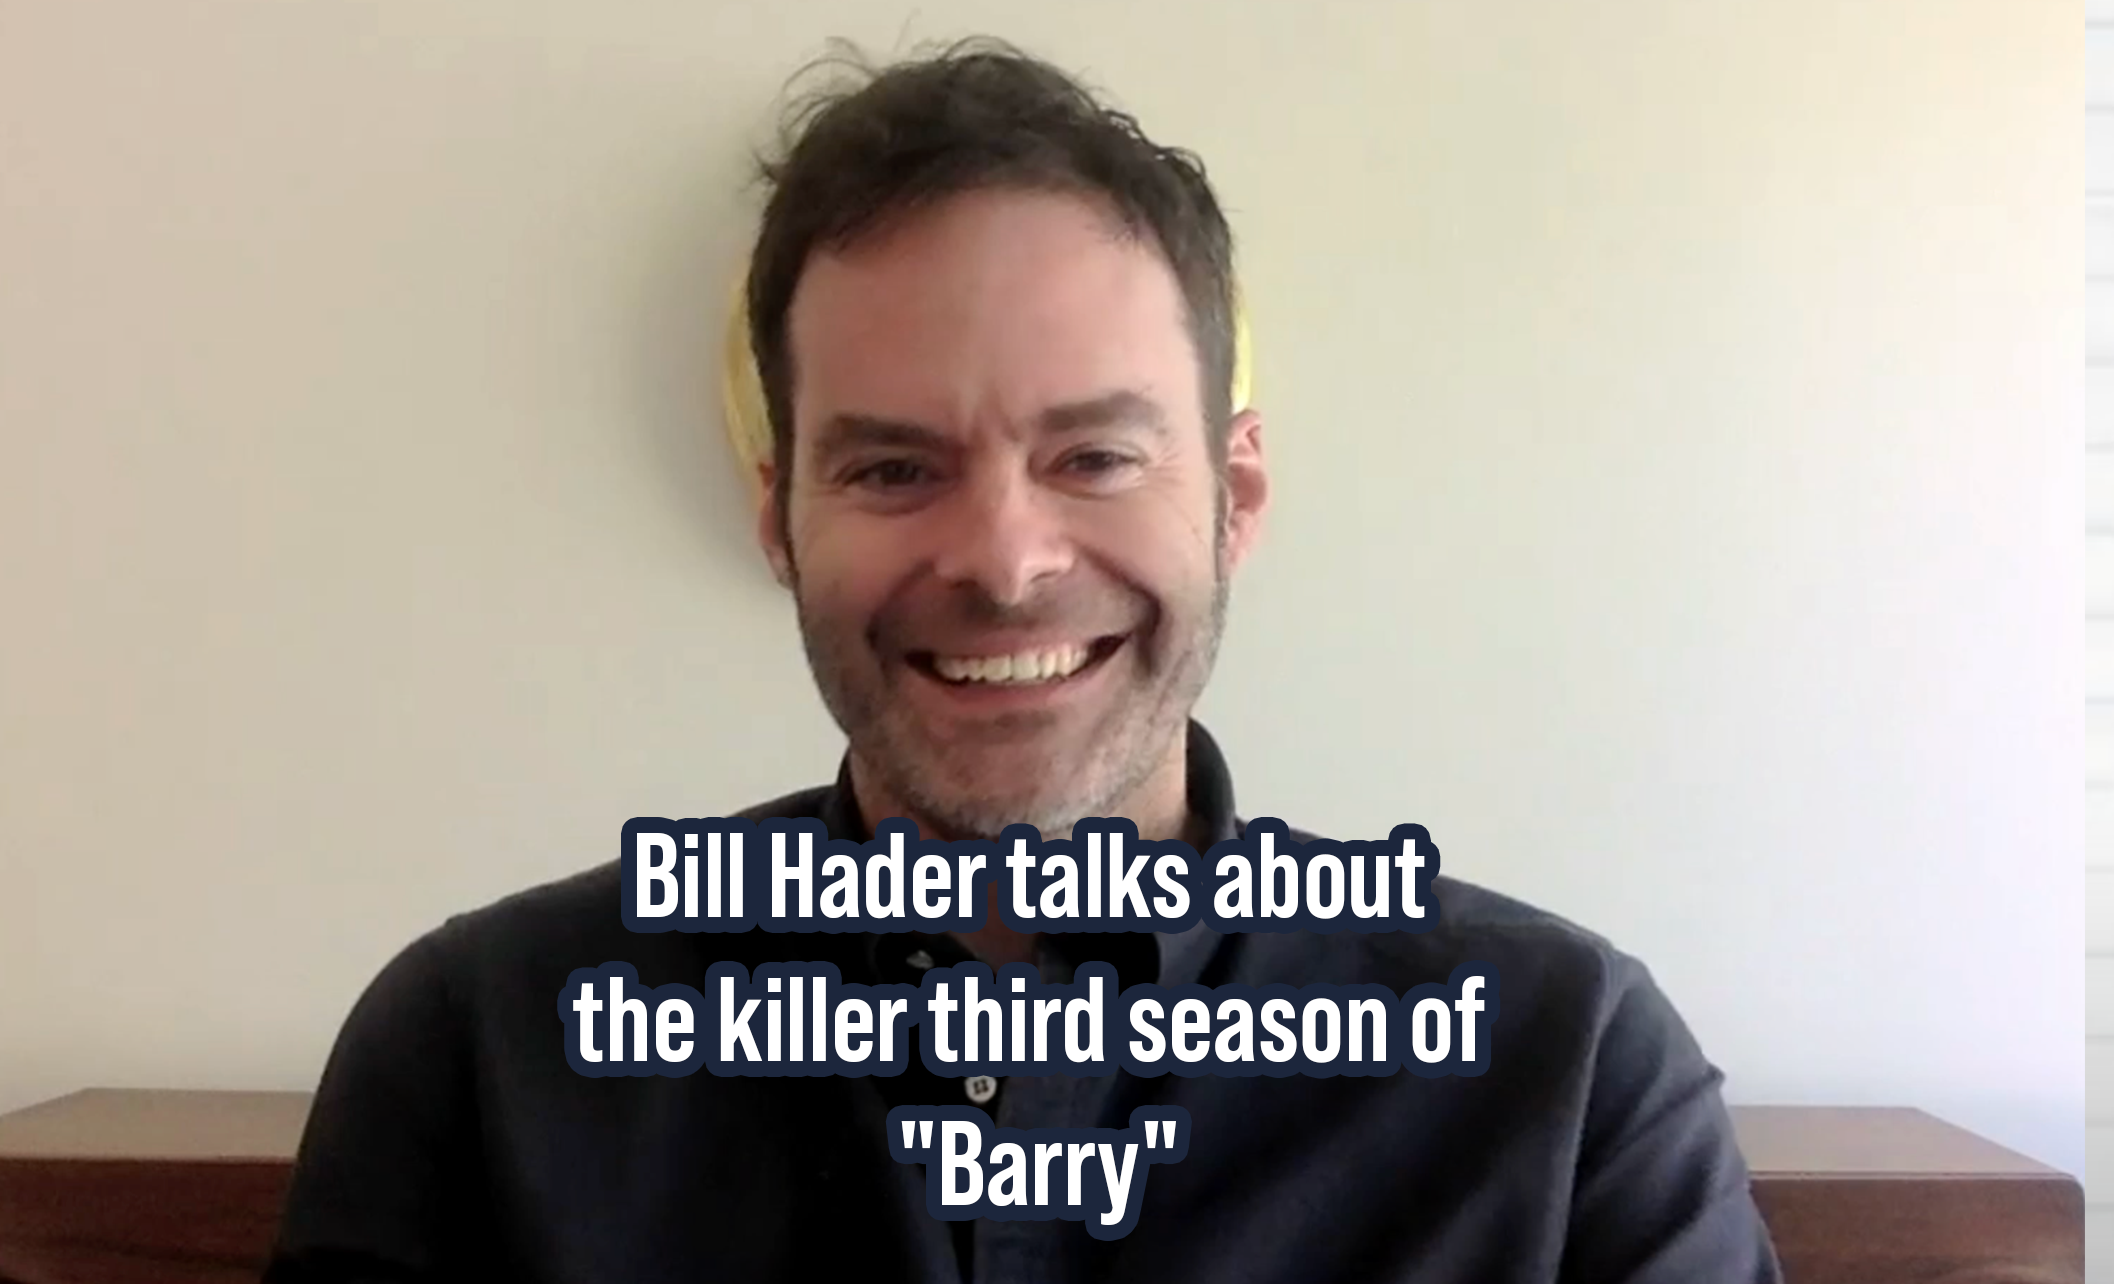 Bill Hader talks about the killer third season of “Barry”